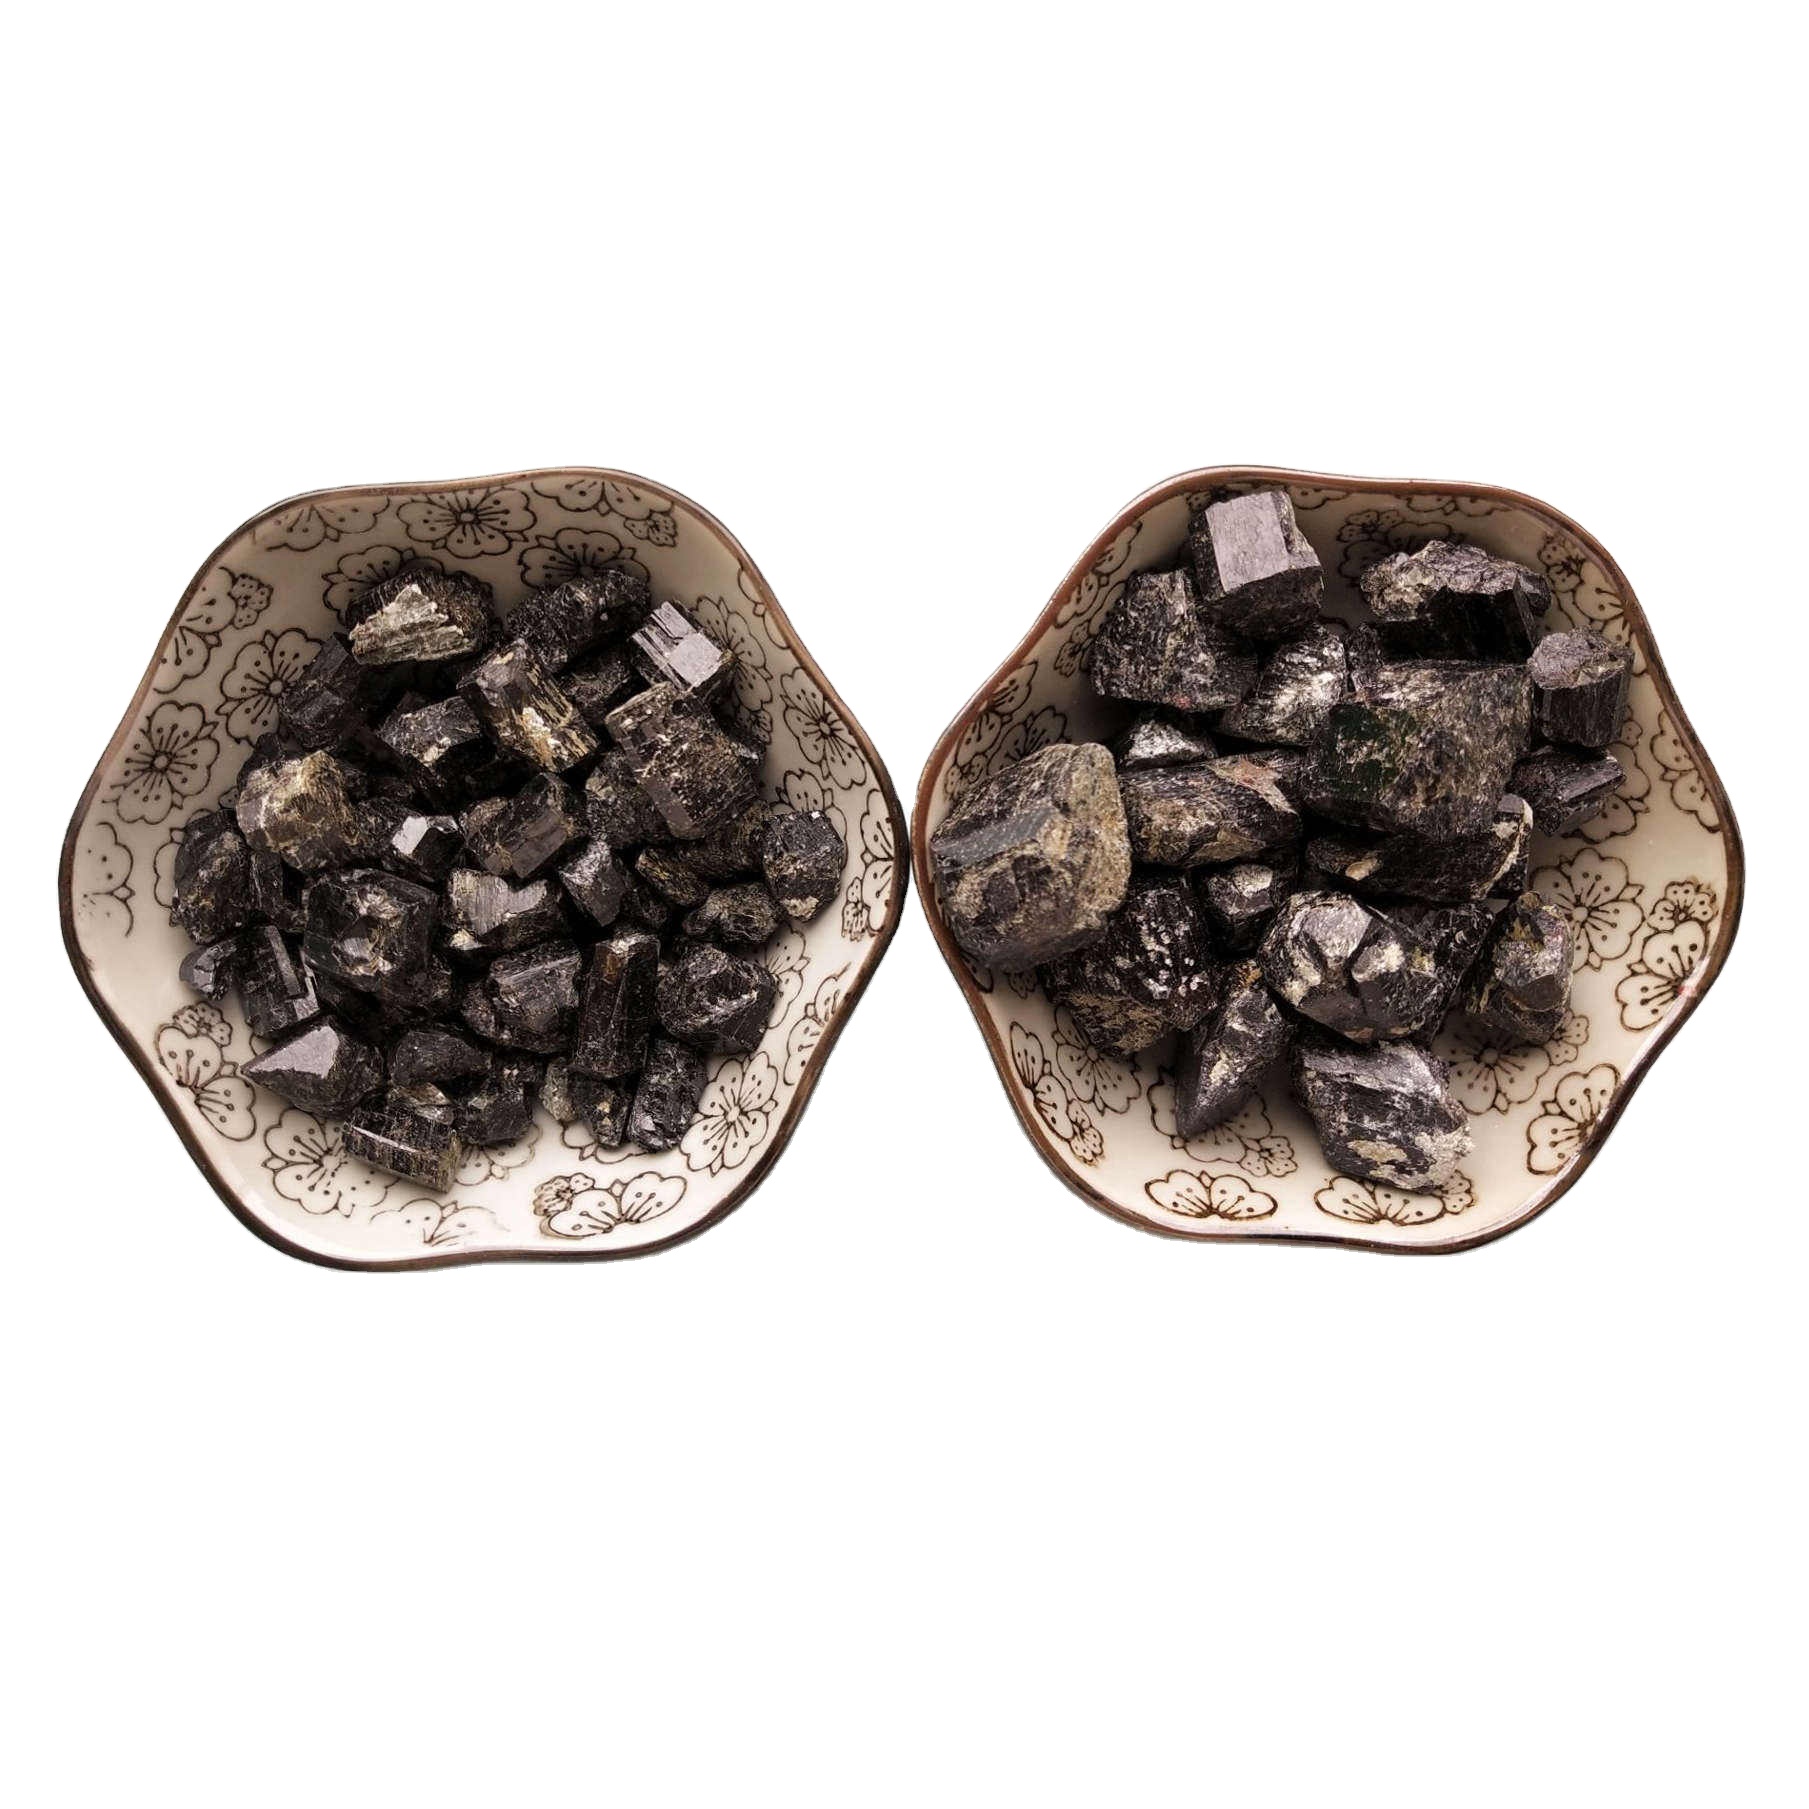 Natural crystals healing stone bulk rough black tourmaline for feng shui stone